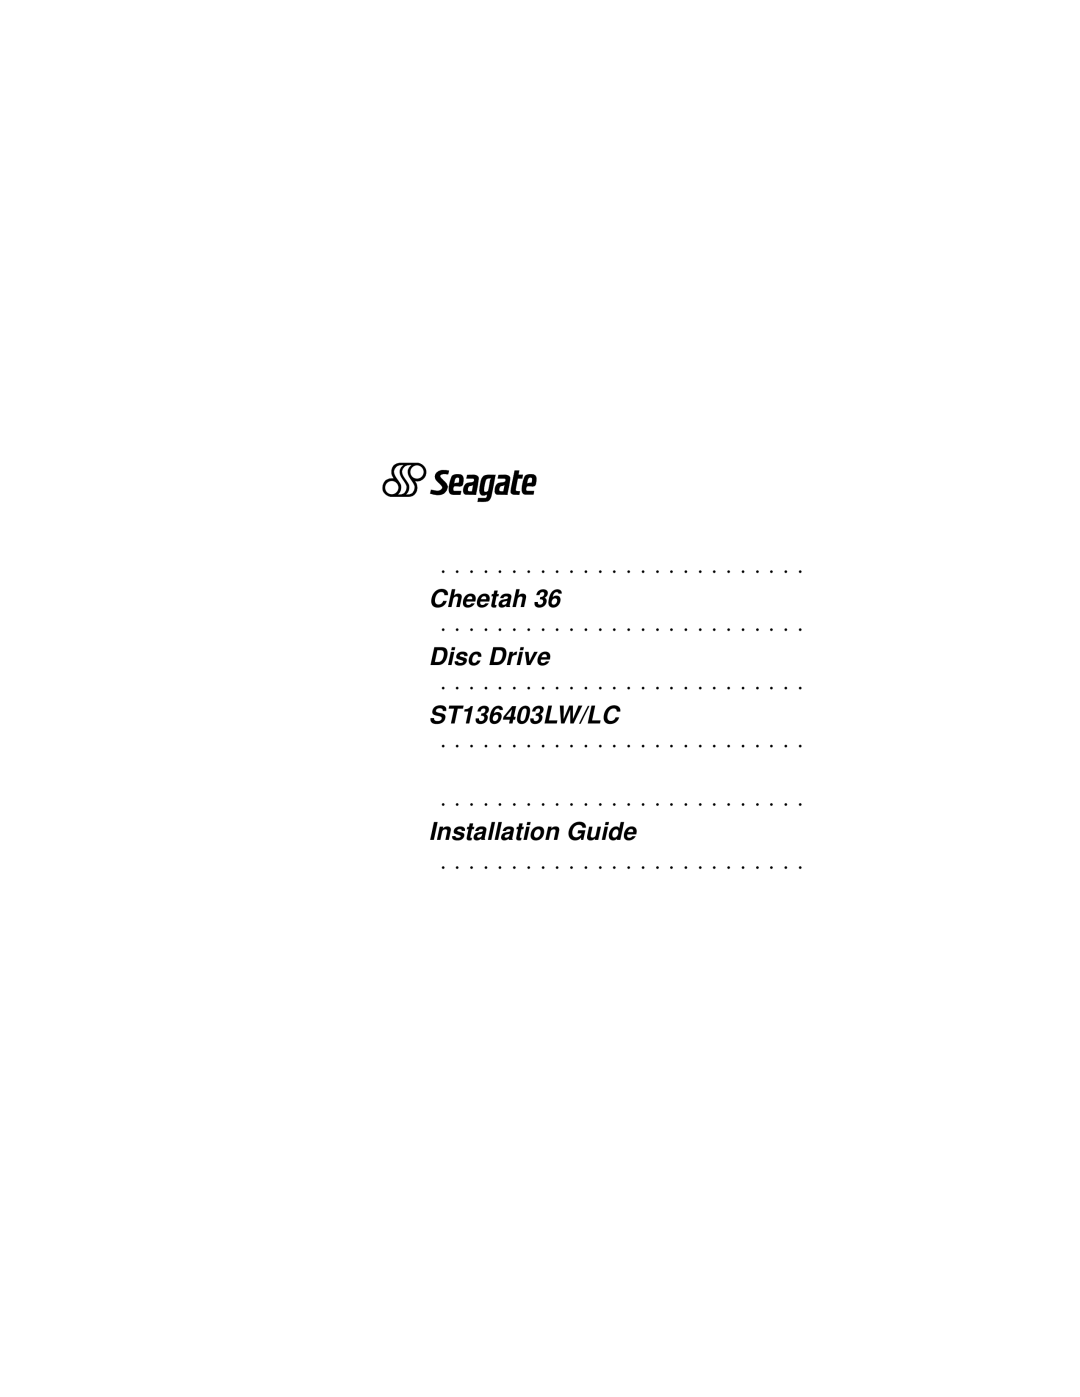 Seagate ST136403LW/LC manual Cheetah, Disc Drive, Installation Guide 